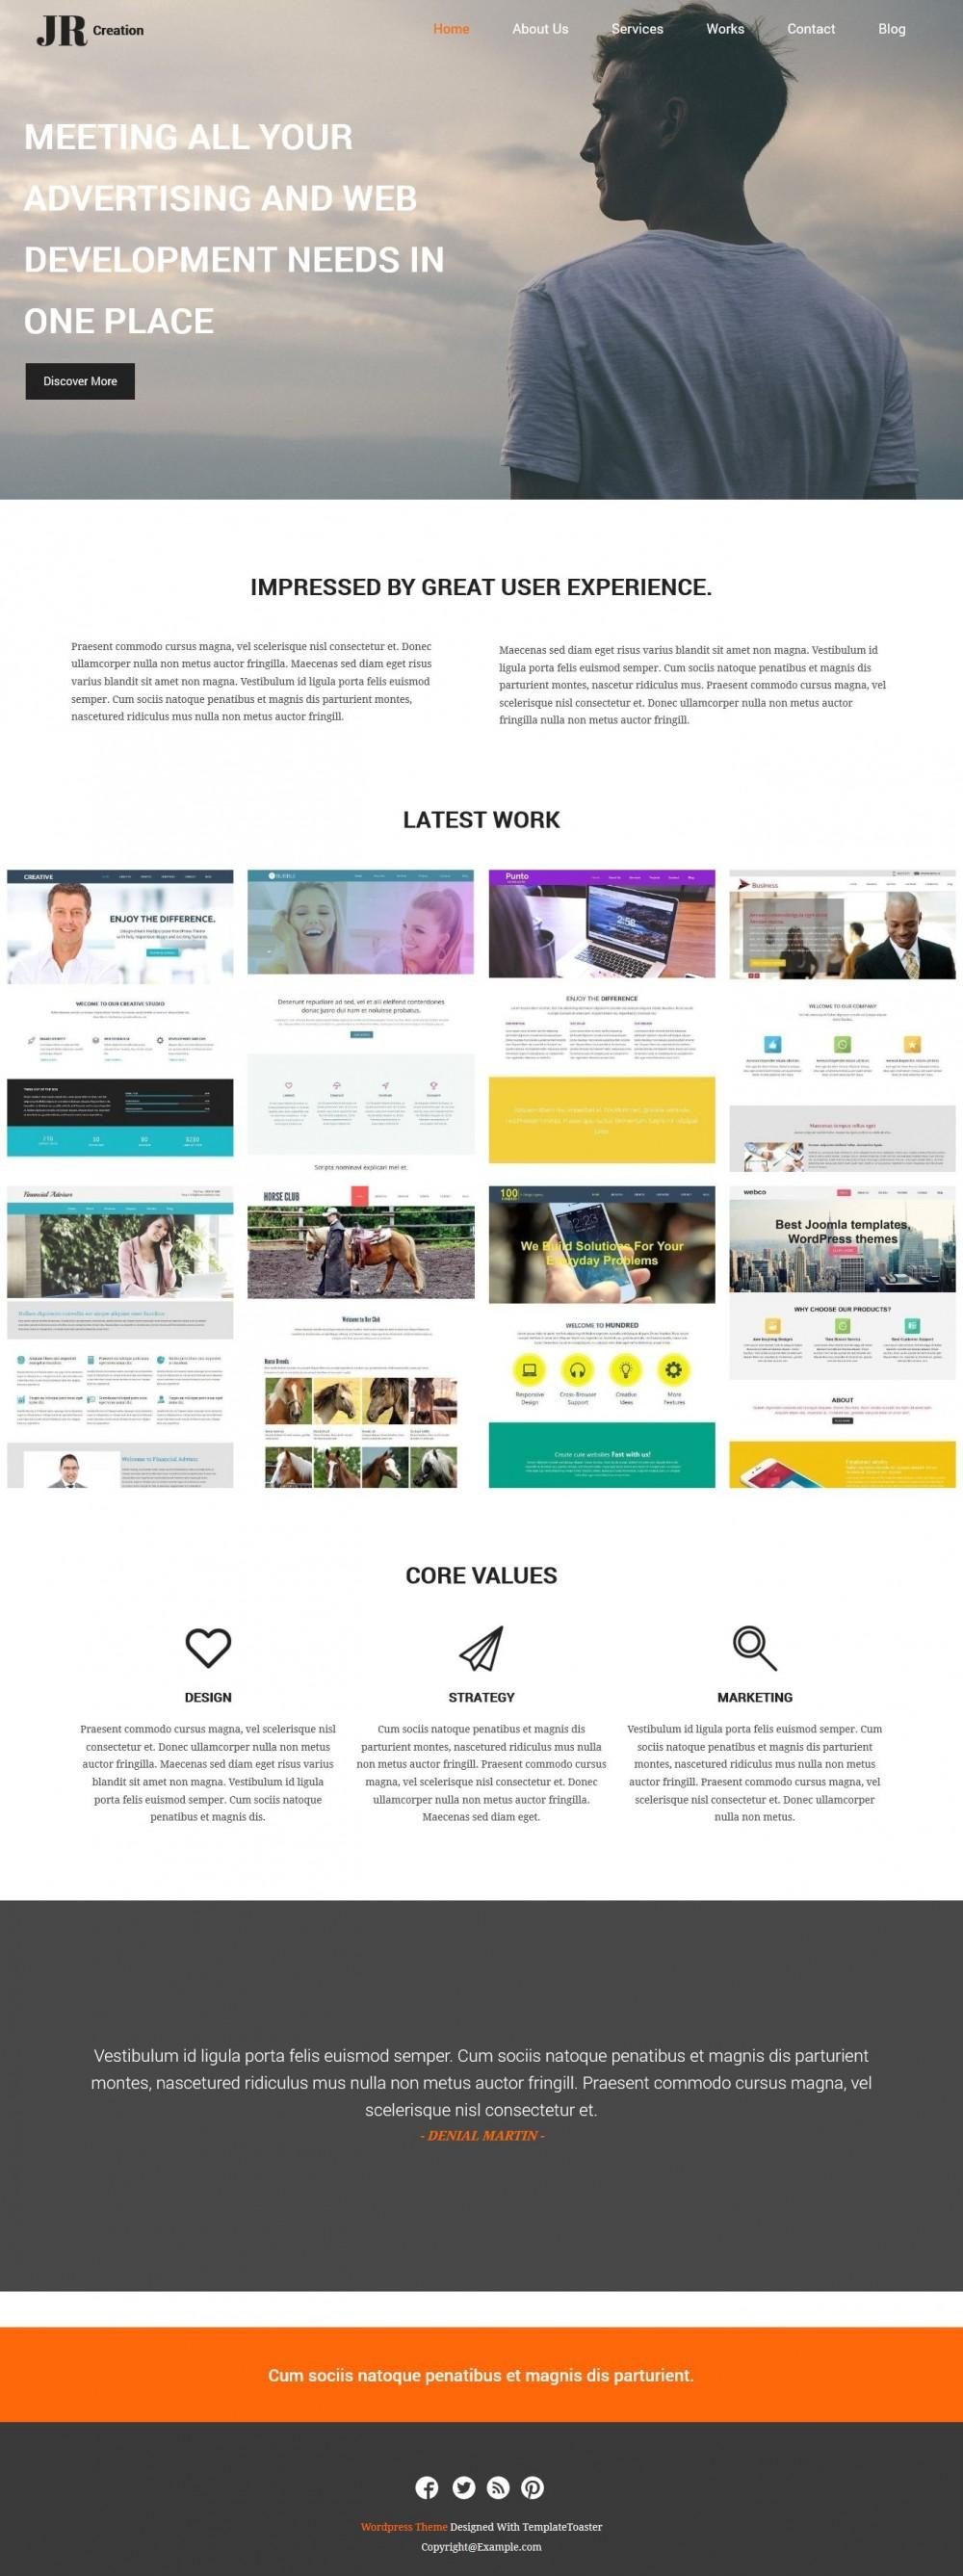 jr creation-web designer portfolio html template